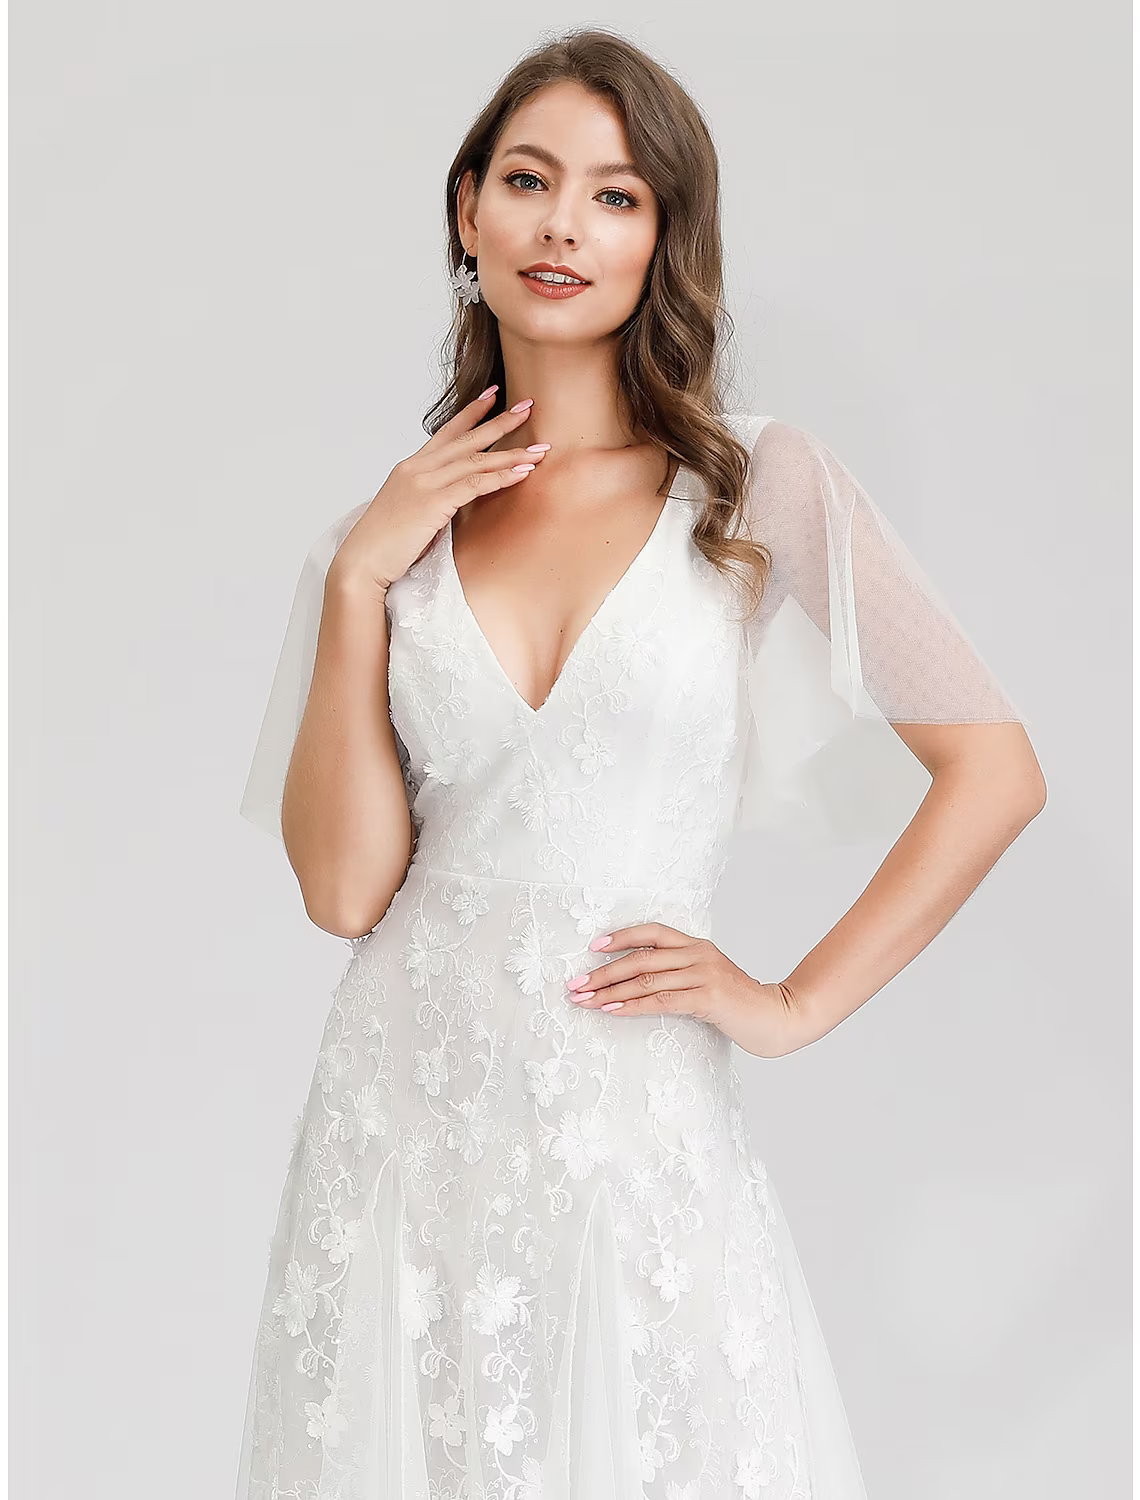 Bridal Shower Wedding Dresses A-Line Short Sleeve V Neck Tulle With Lace Appliques